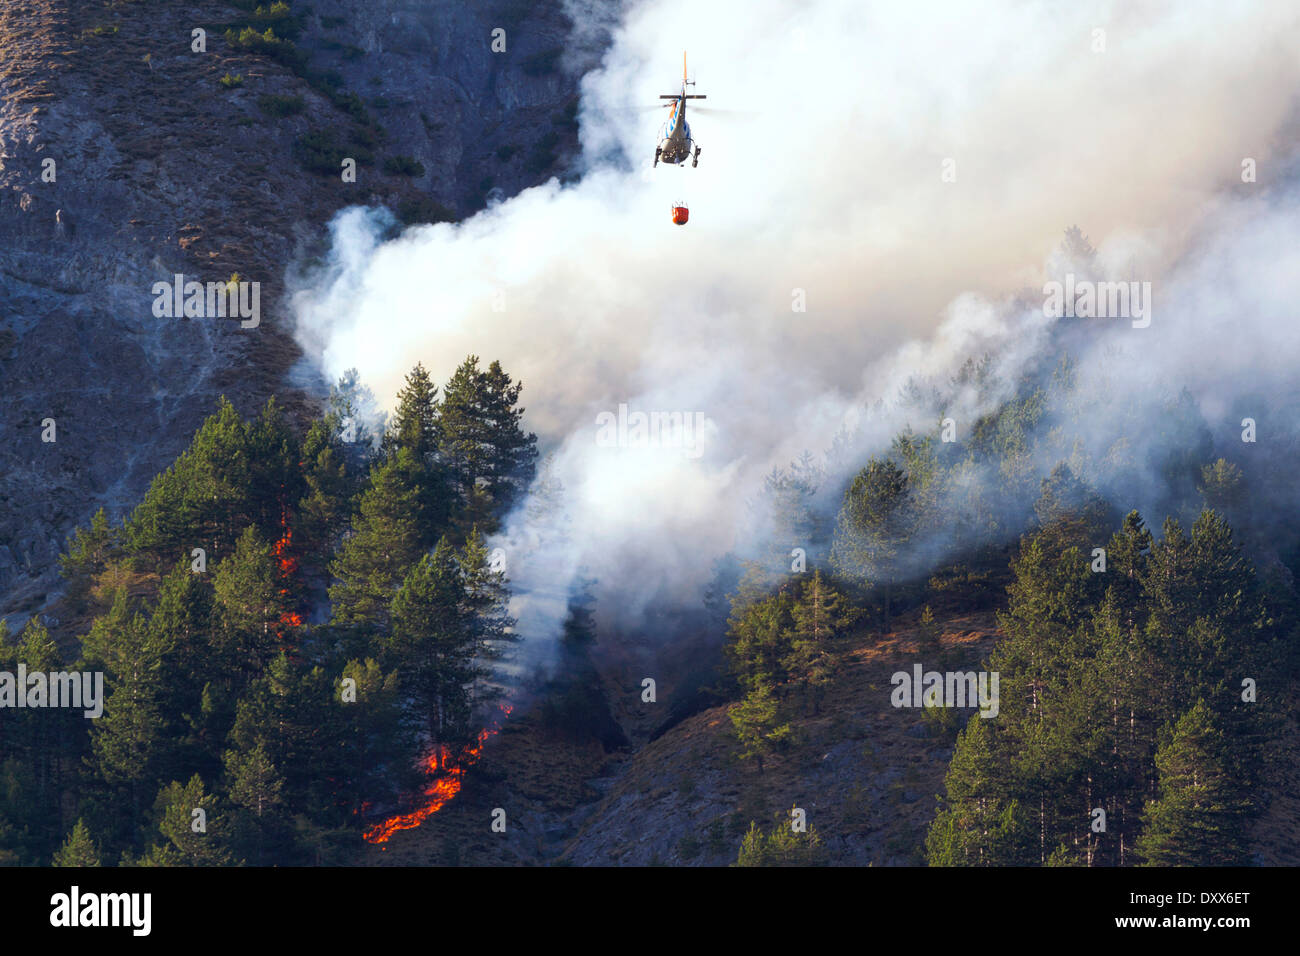 Helicóptero agua de dumping durante un incendio forestal, Tirol, Austria Foto de stock